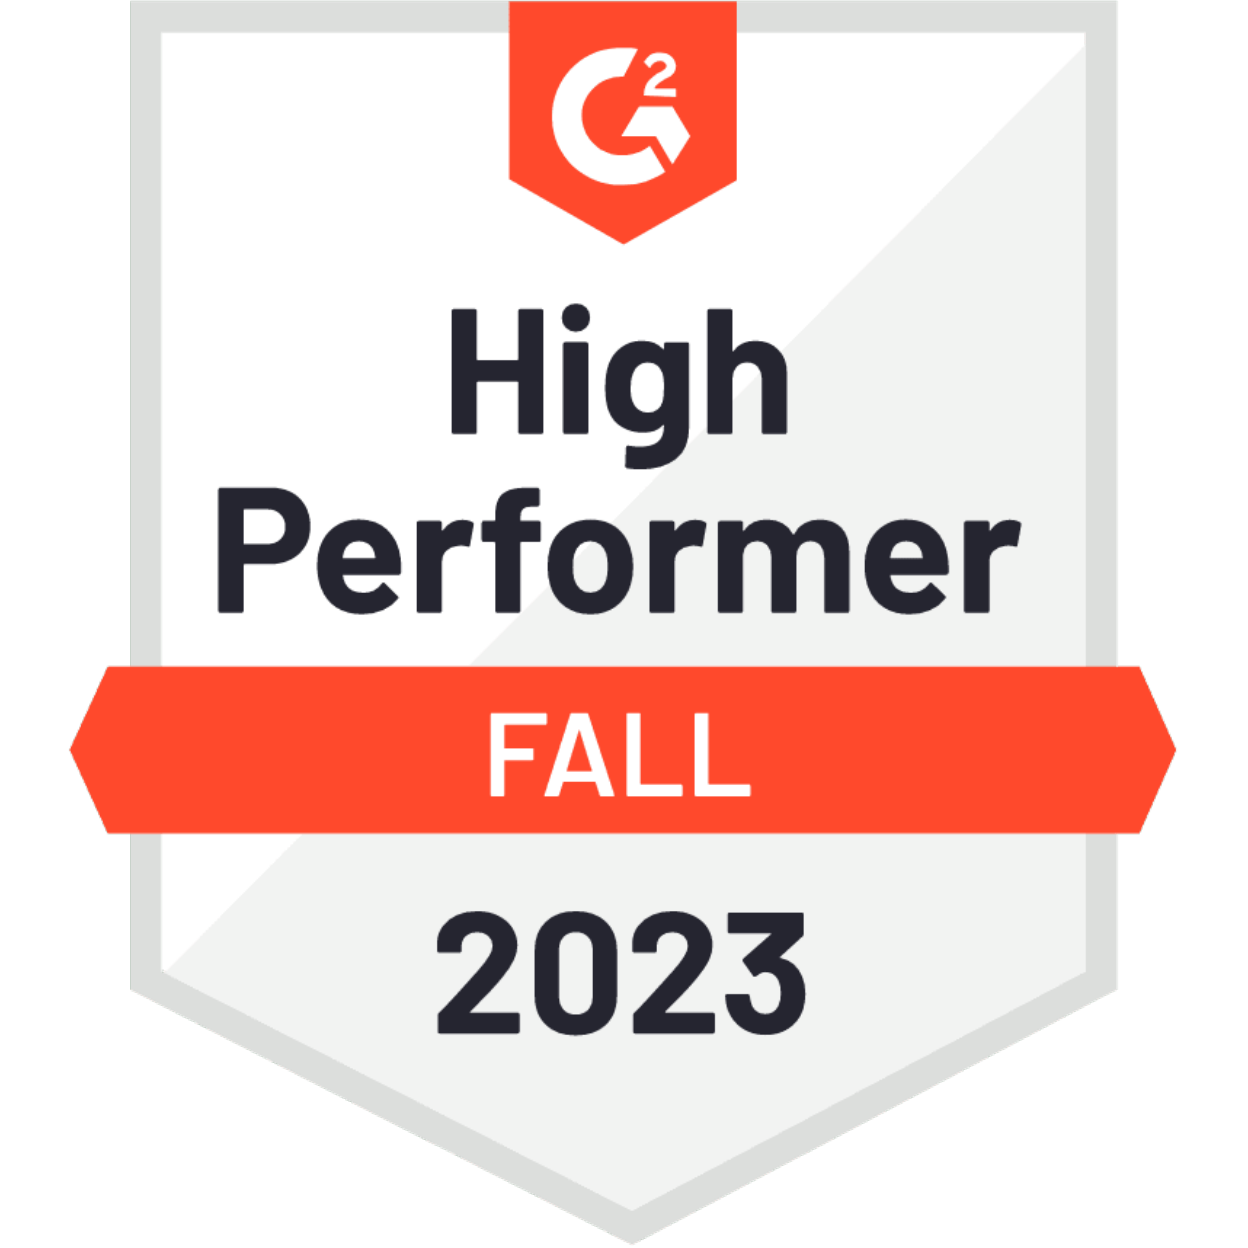 G2 Badge: High Performer Fall 2023